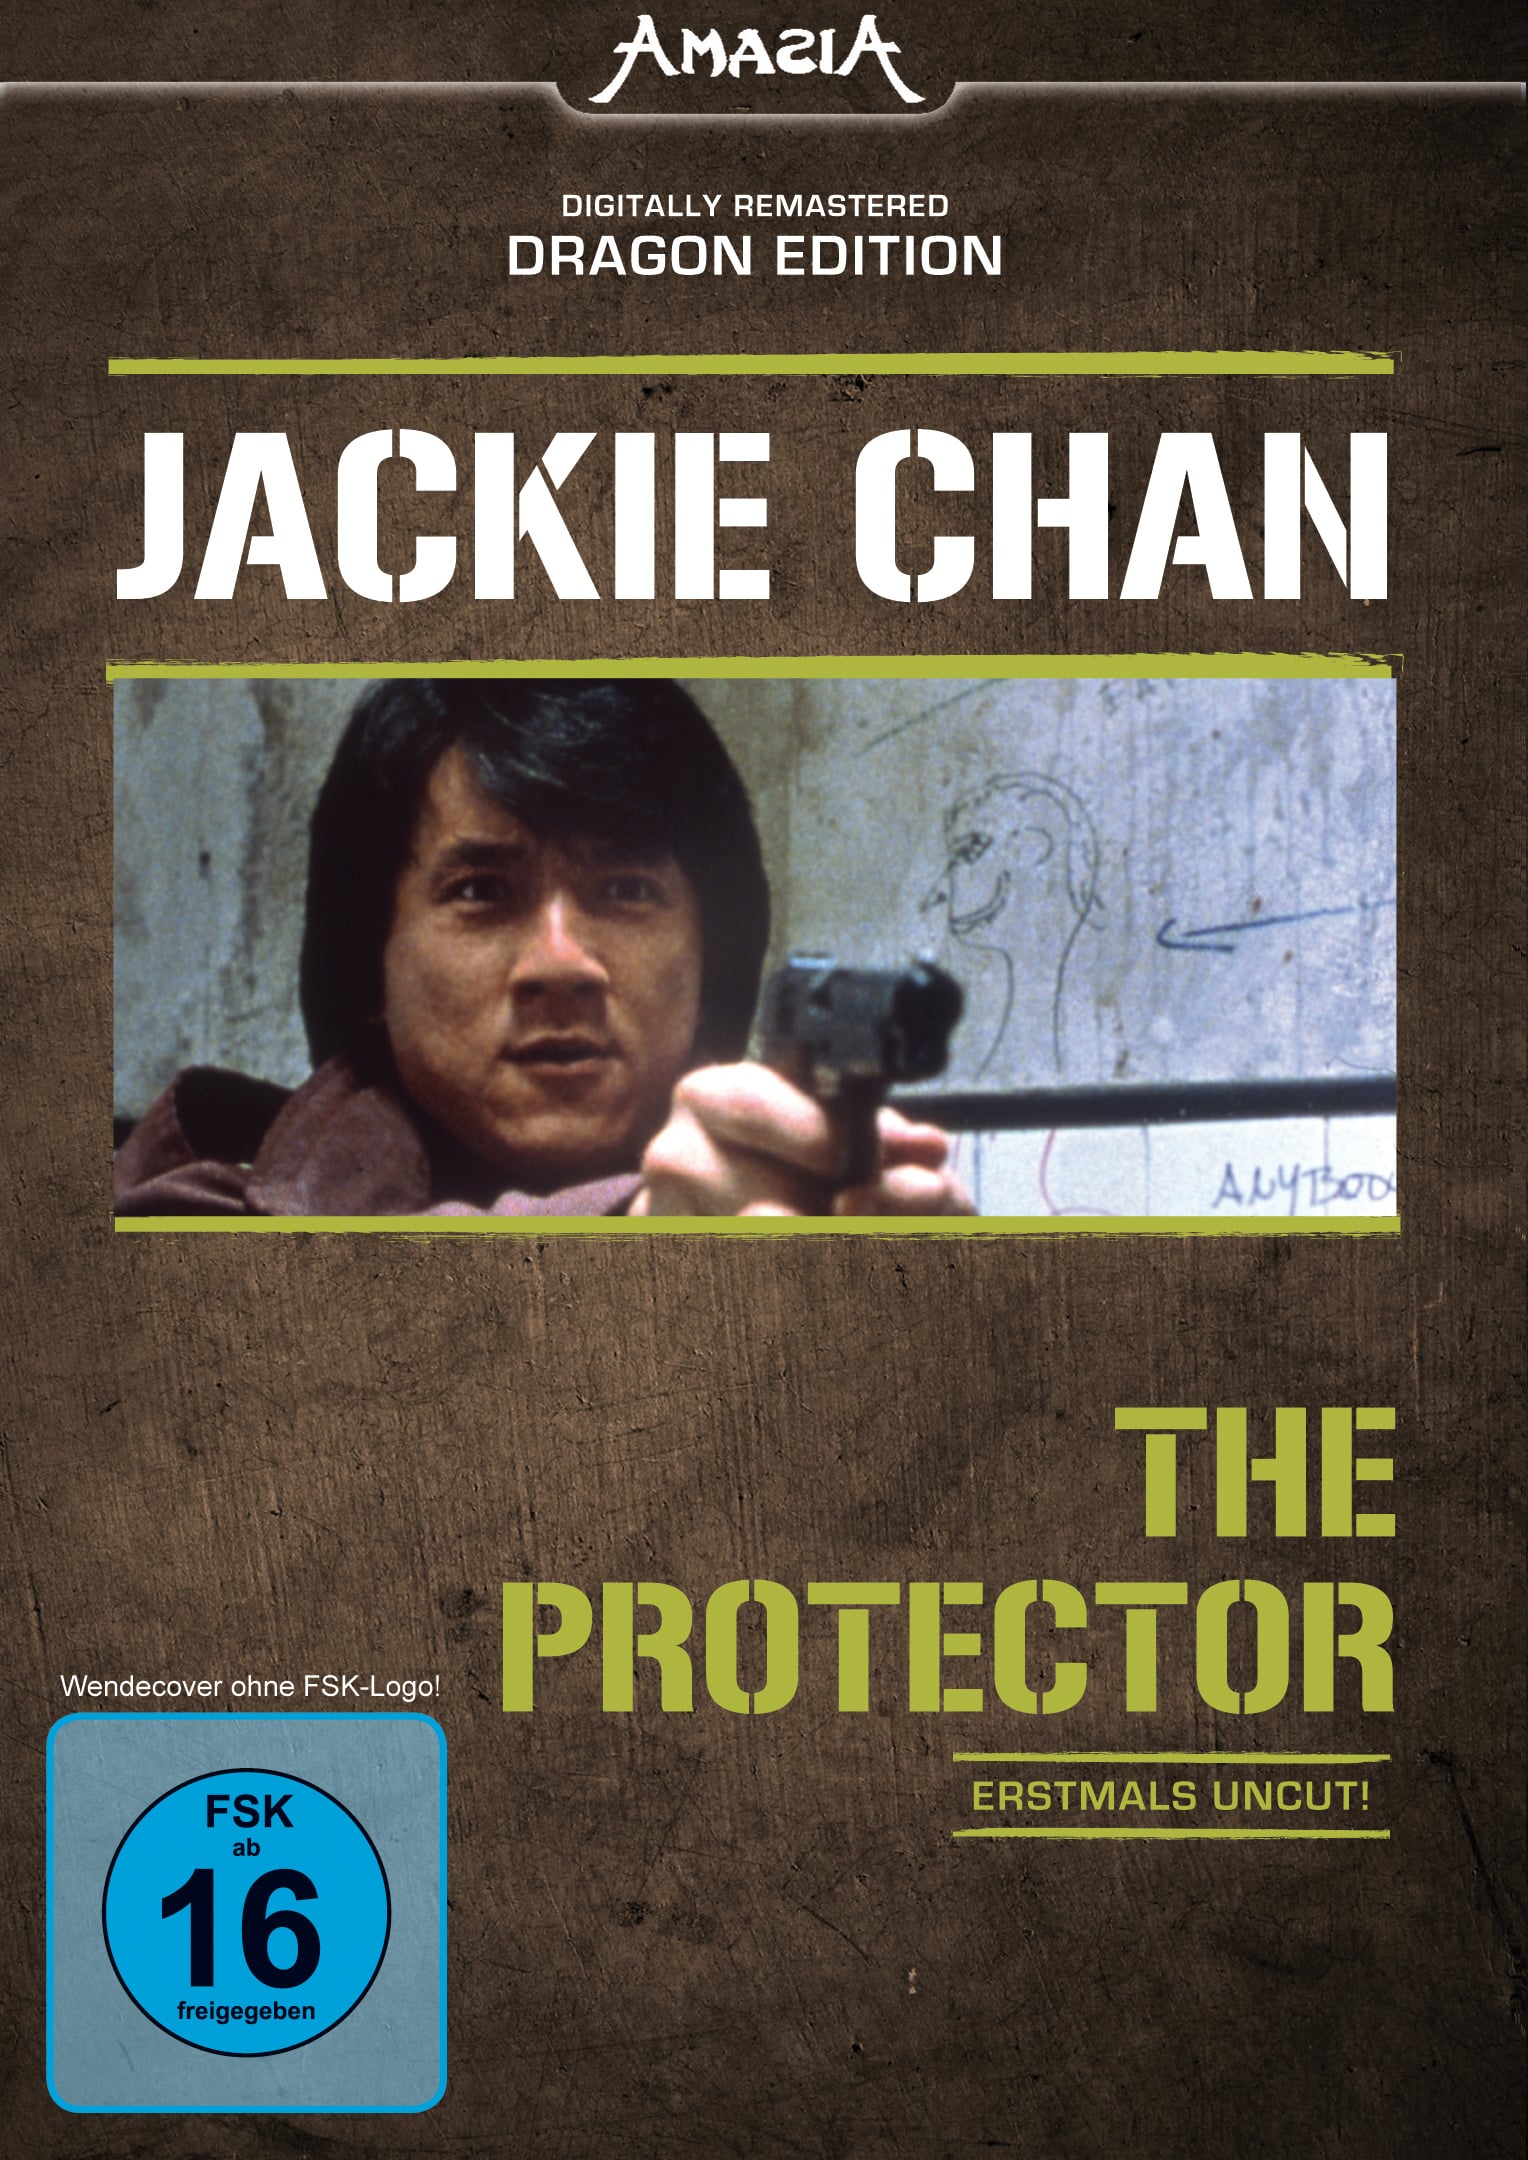 Plakat von "The Protector"